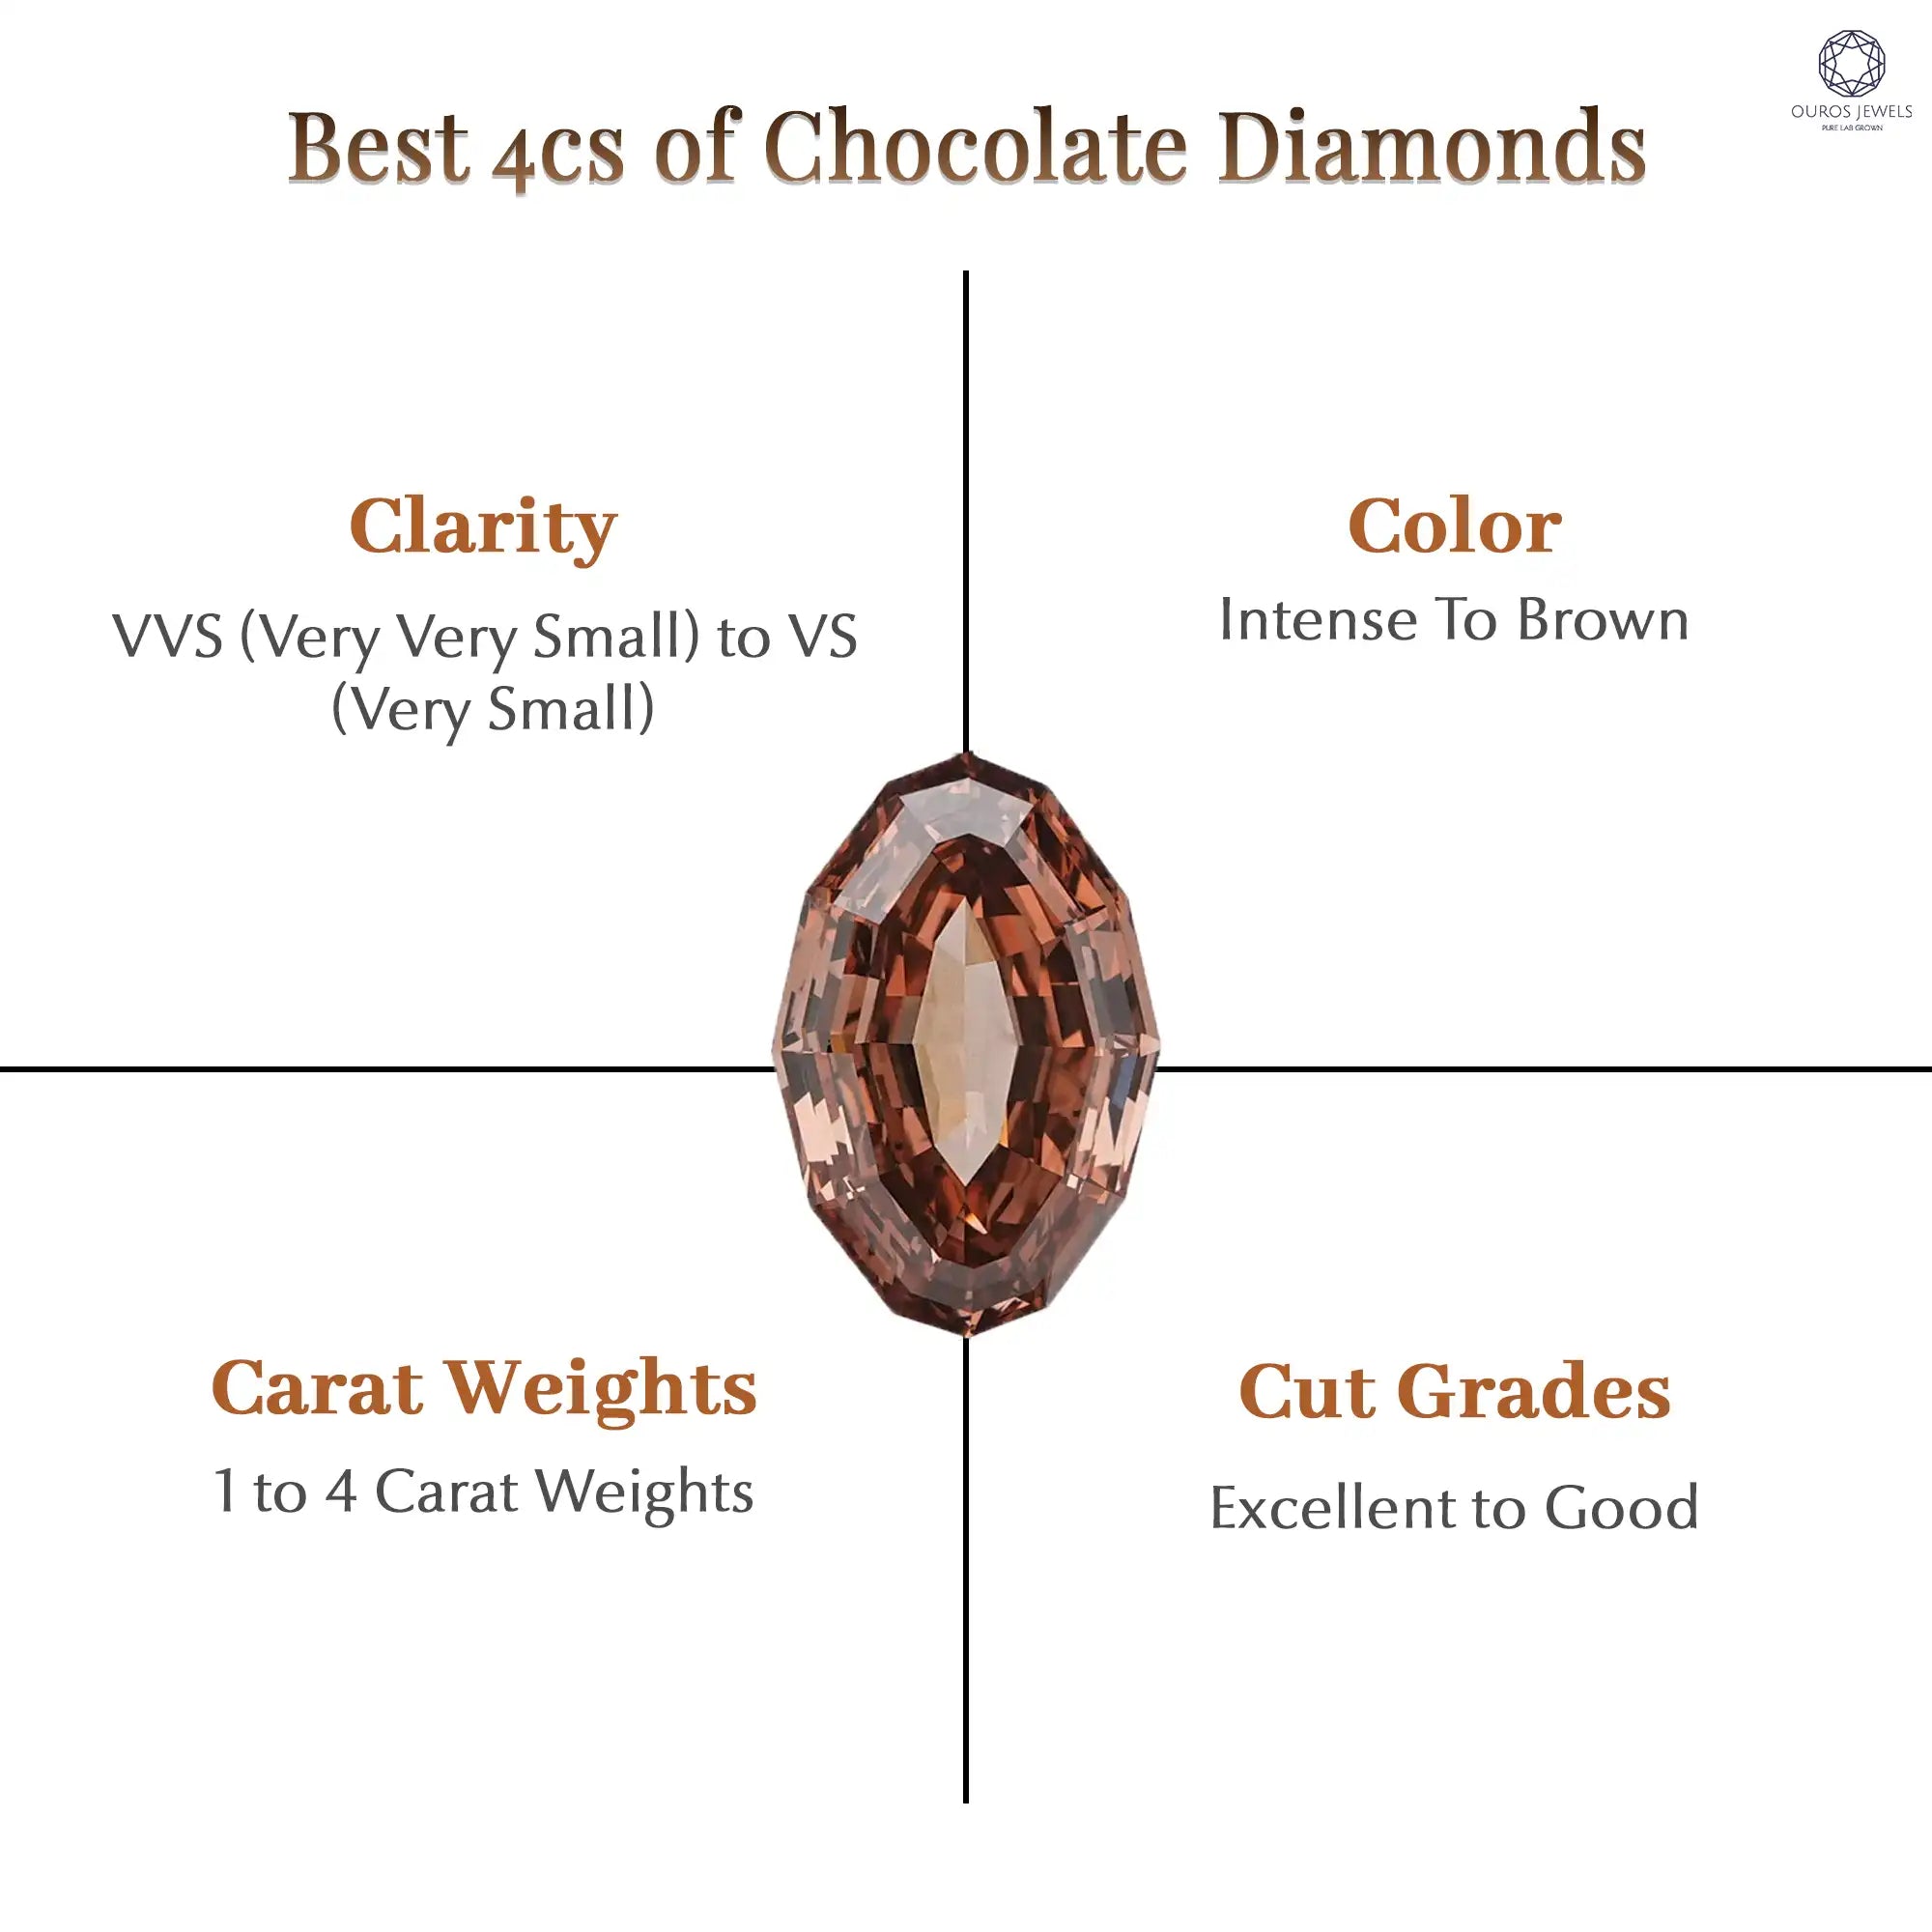 Diamond 4cs grades in chocolate colored gems